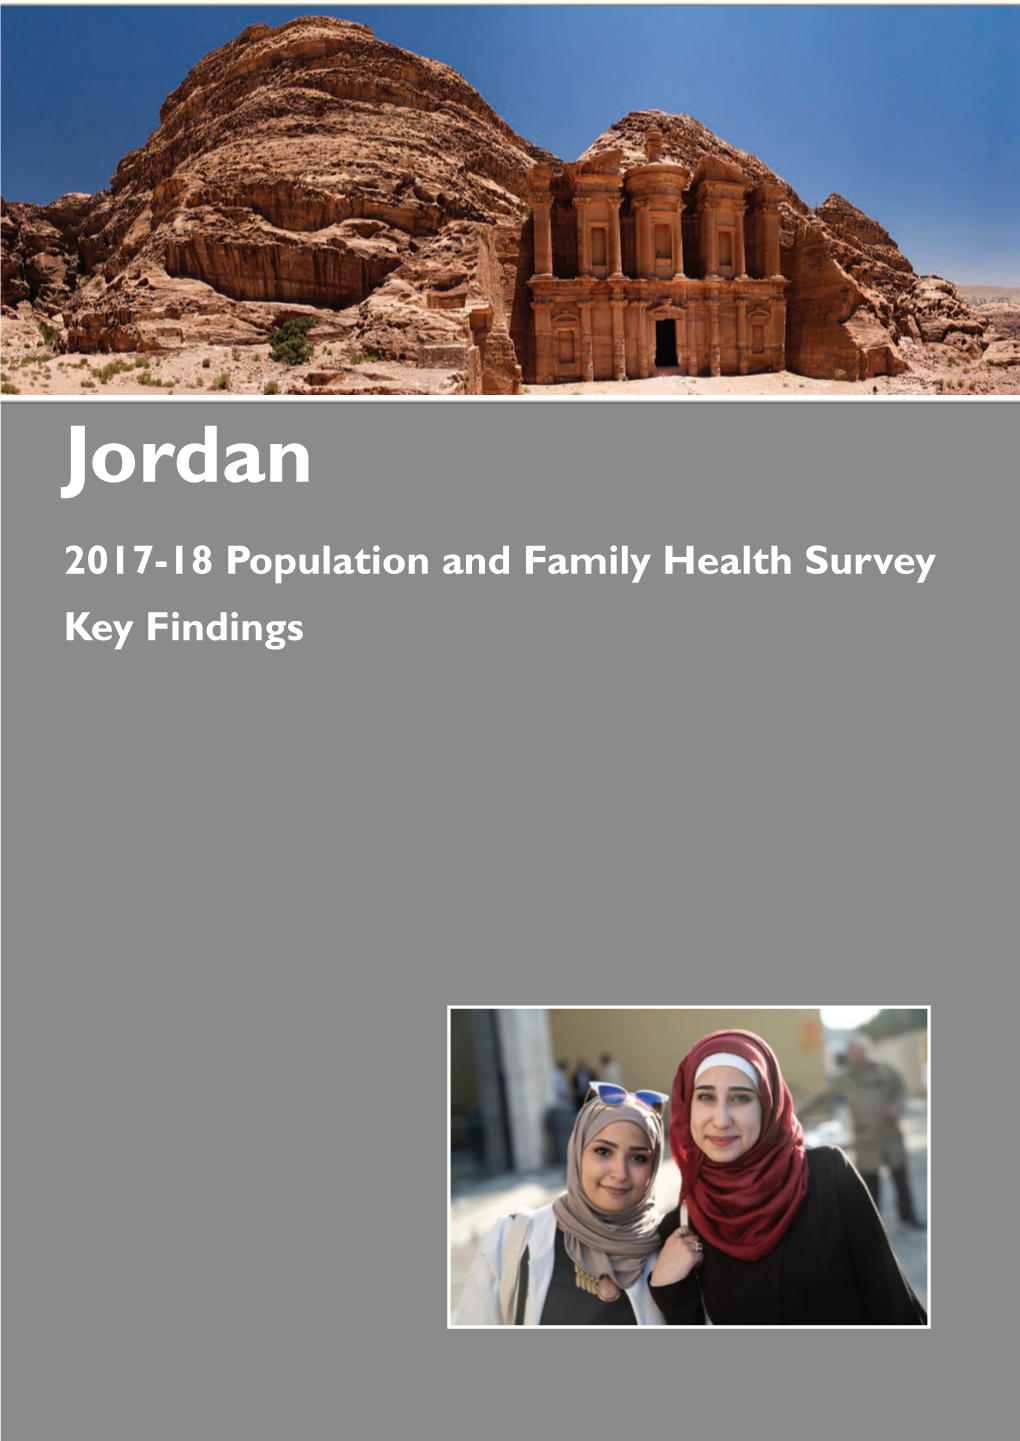 Jordan 2017-18 Population and Family Health Survey